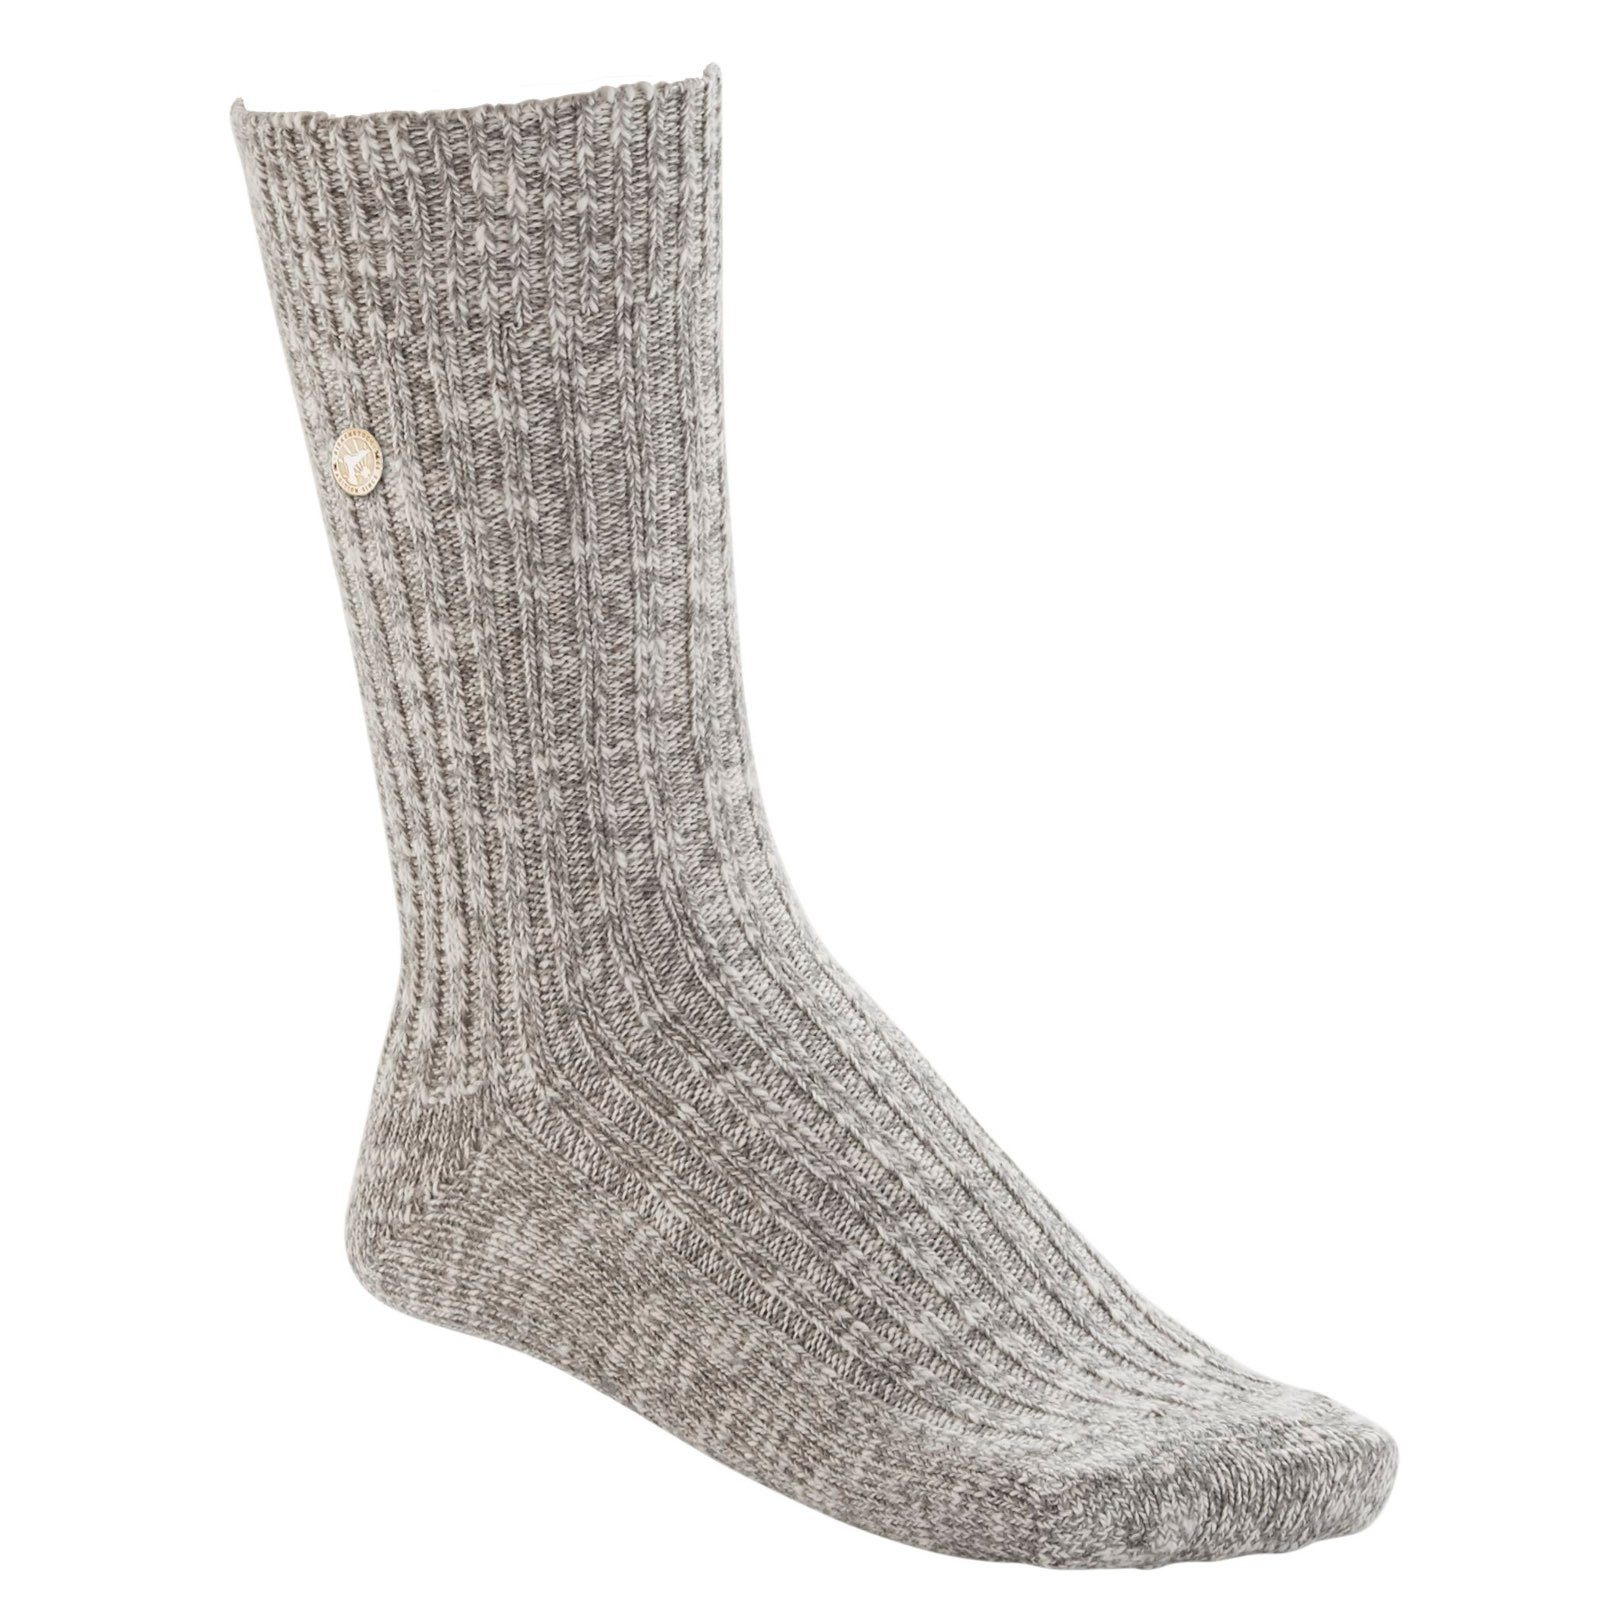 Damen Kurzsocken Cotton - Socken Grau/Weiß Slub Birkenstock Strumpf,